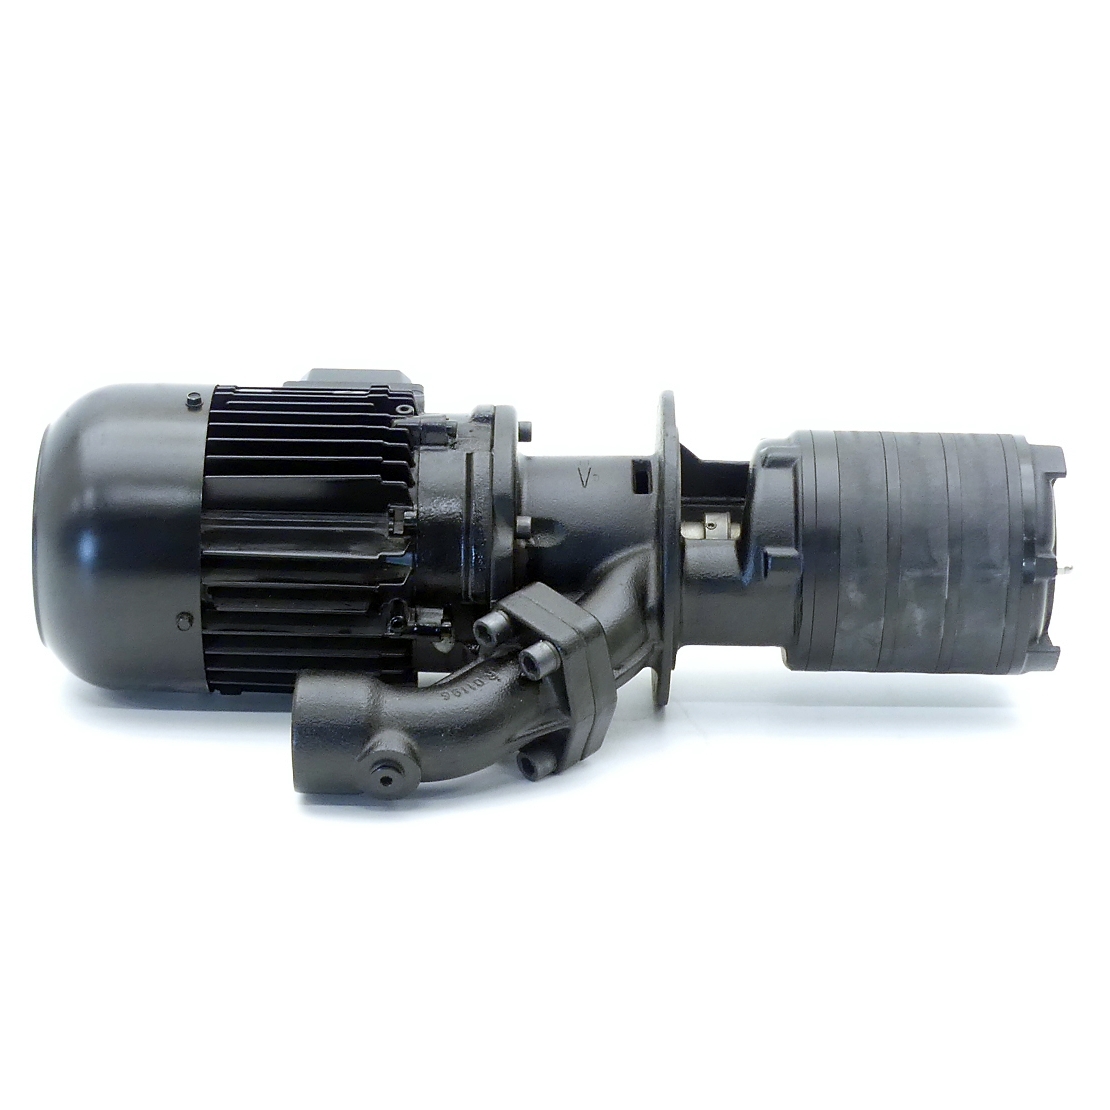 Submersible pump STE144/220+001 